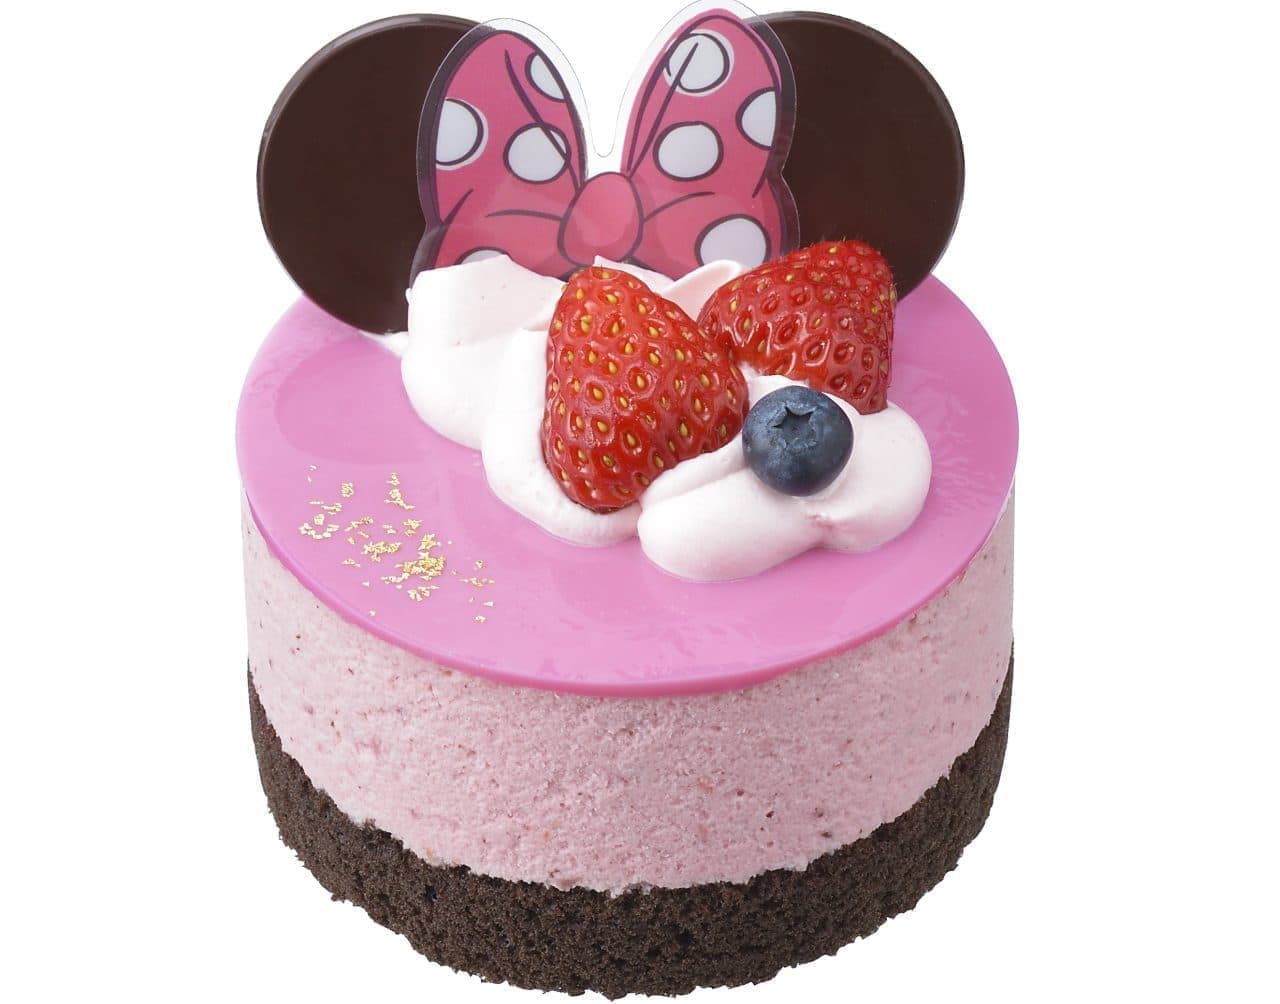 Ginza Cozy Corner "[Minnie Mouse] Berry Berry Box"